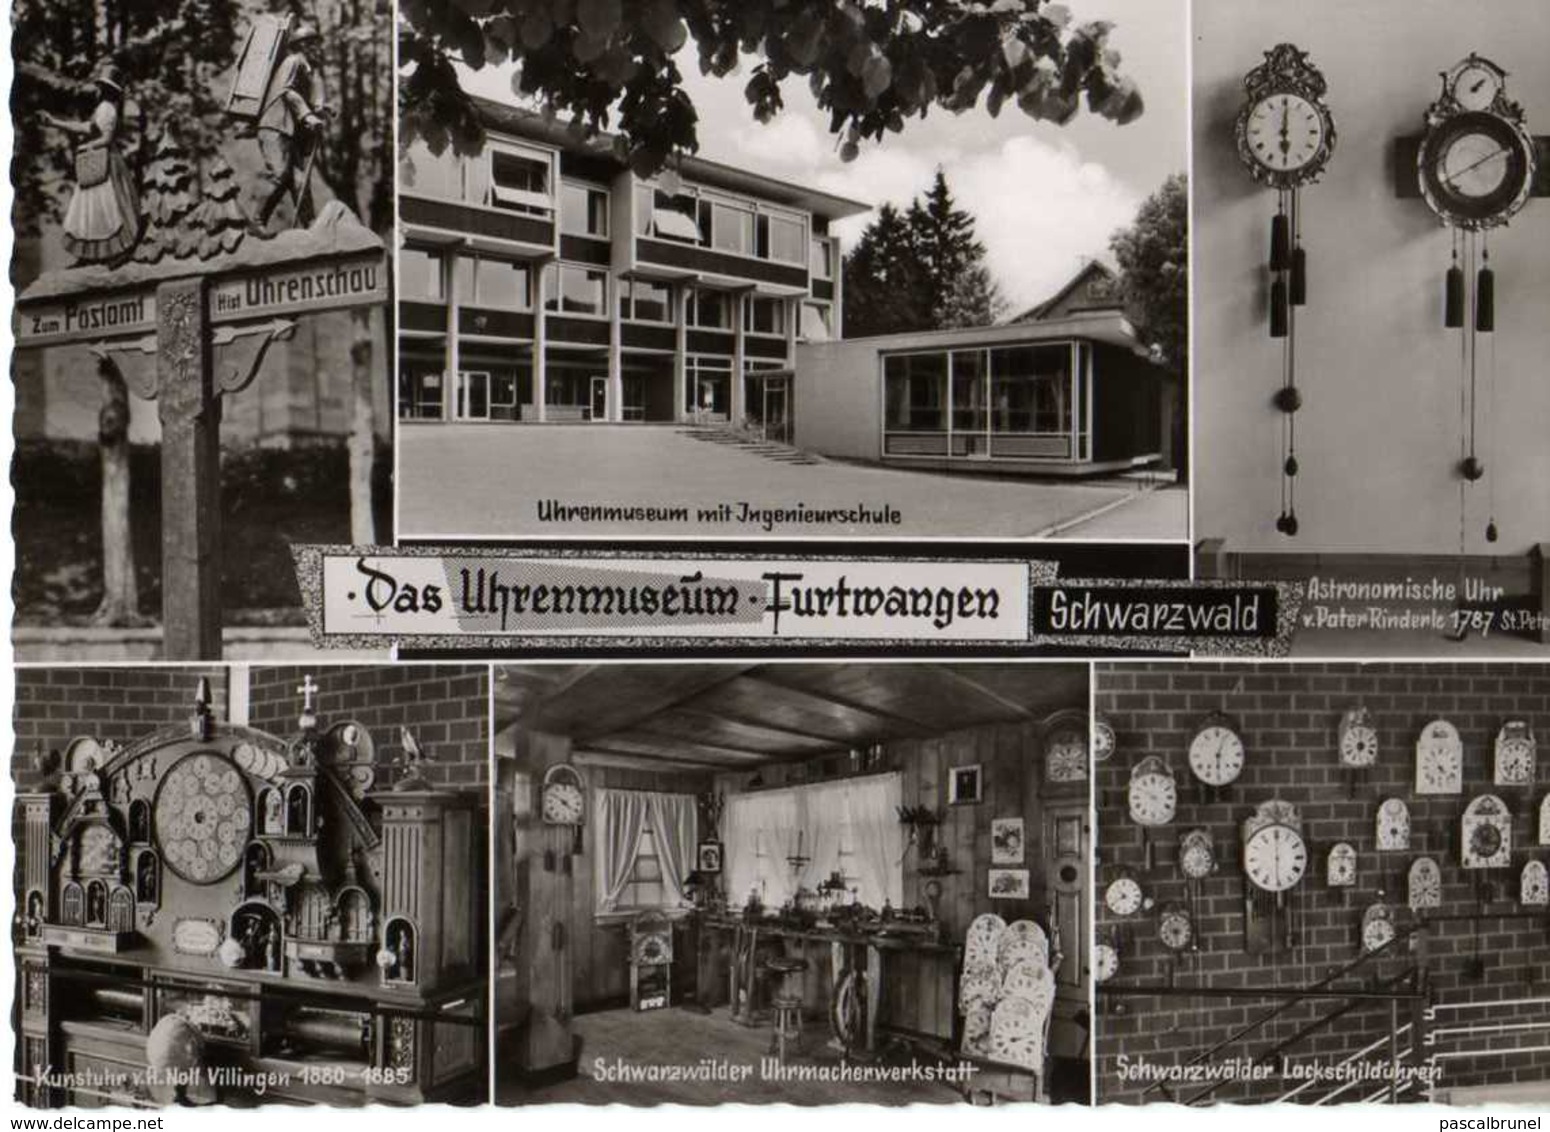 FURTWANGEN - SCHWARZWALD - DAS UHRENMUSEUM - Furtwangen